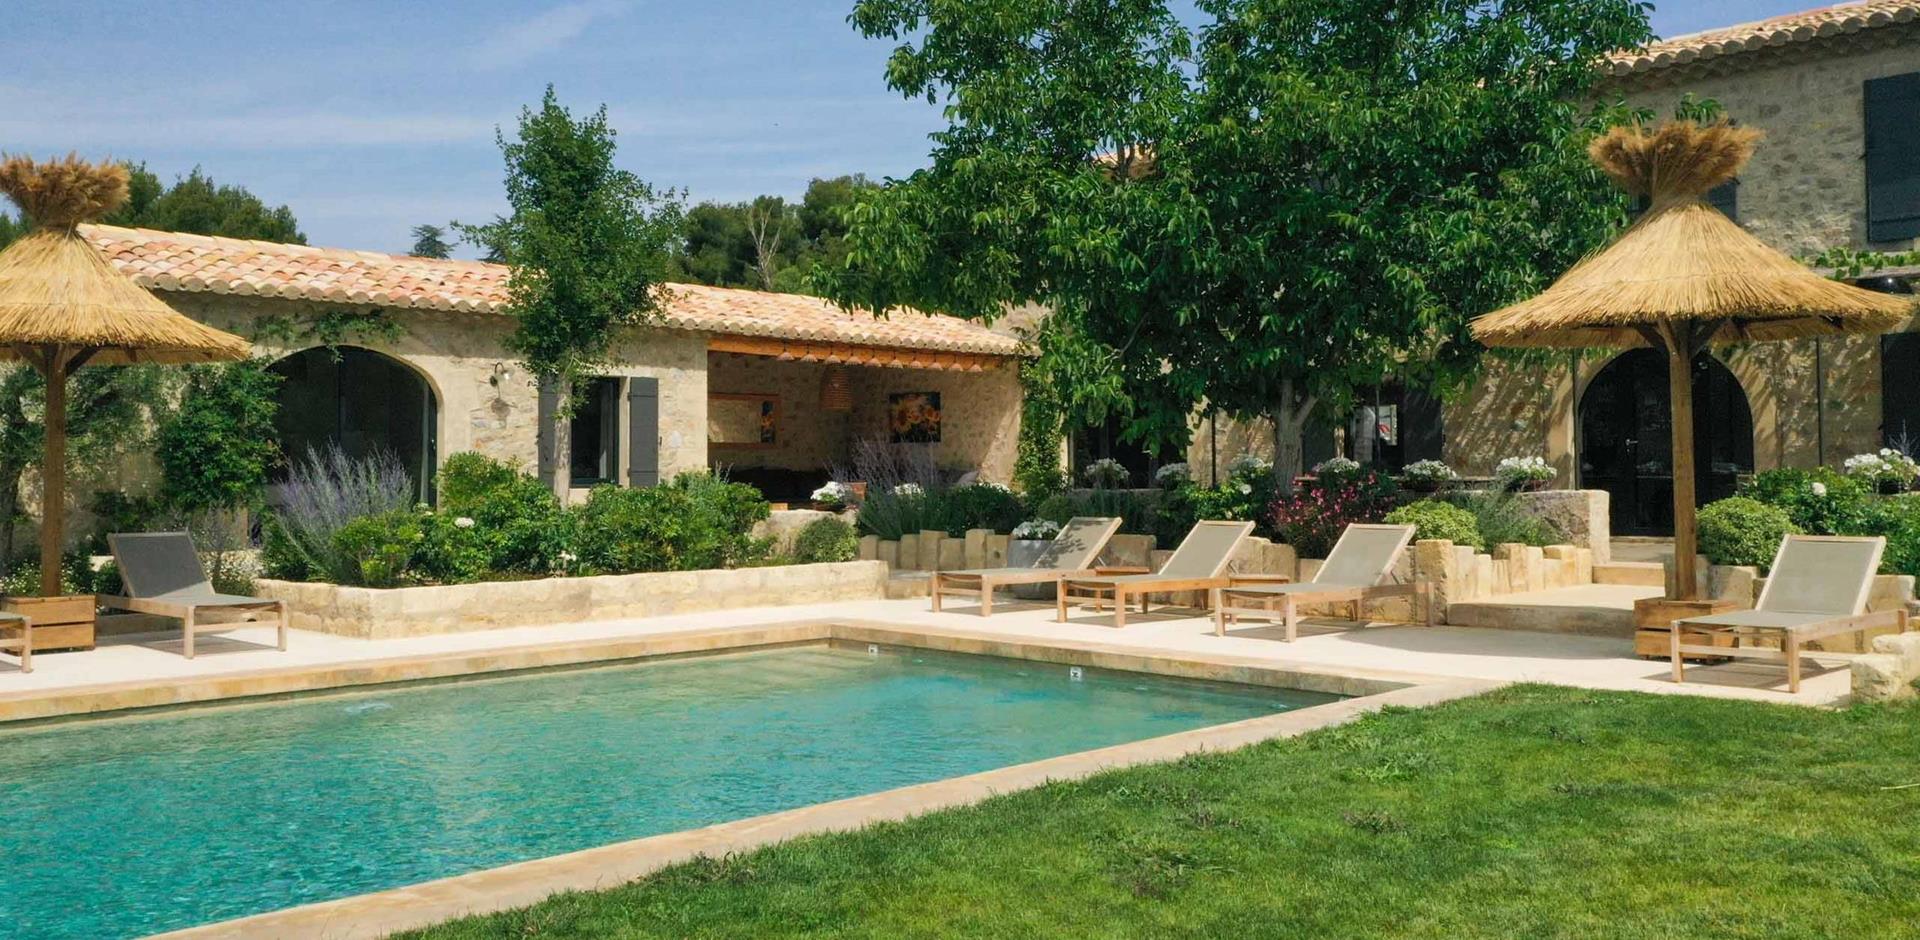 Pool, Le Mas des Fleurs, Provence, France